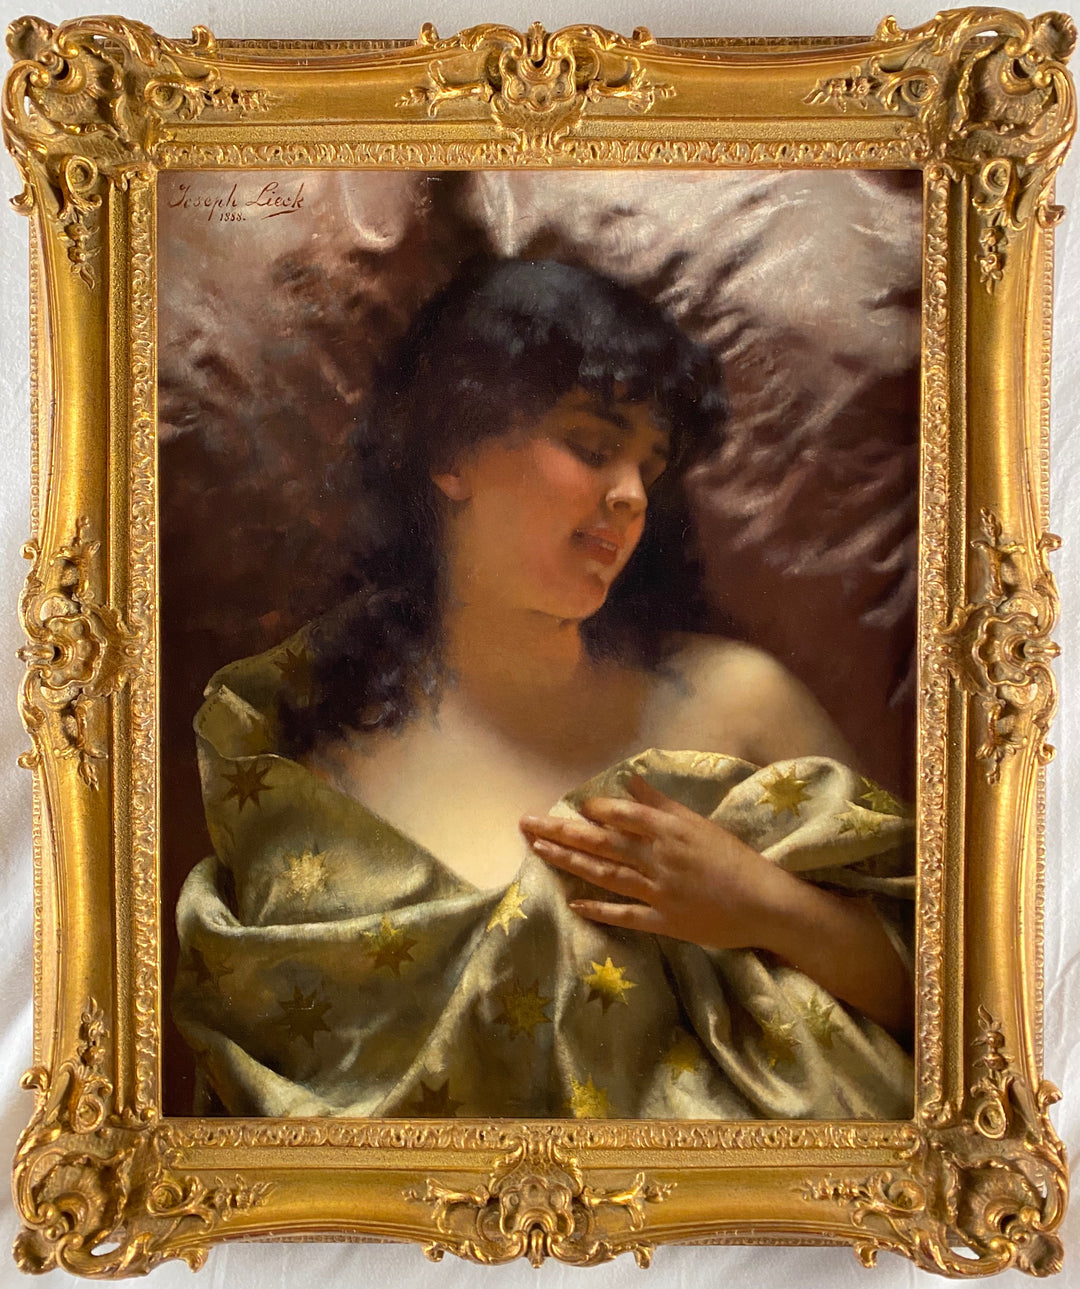 Sleeping Beauty (c. 1888) by Joseph Lieck